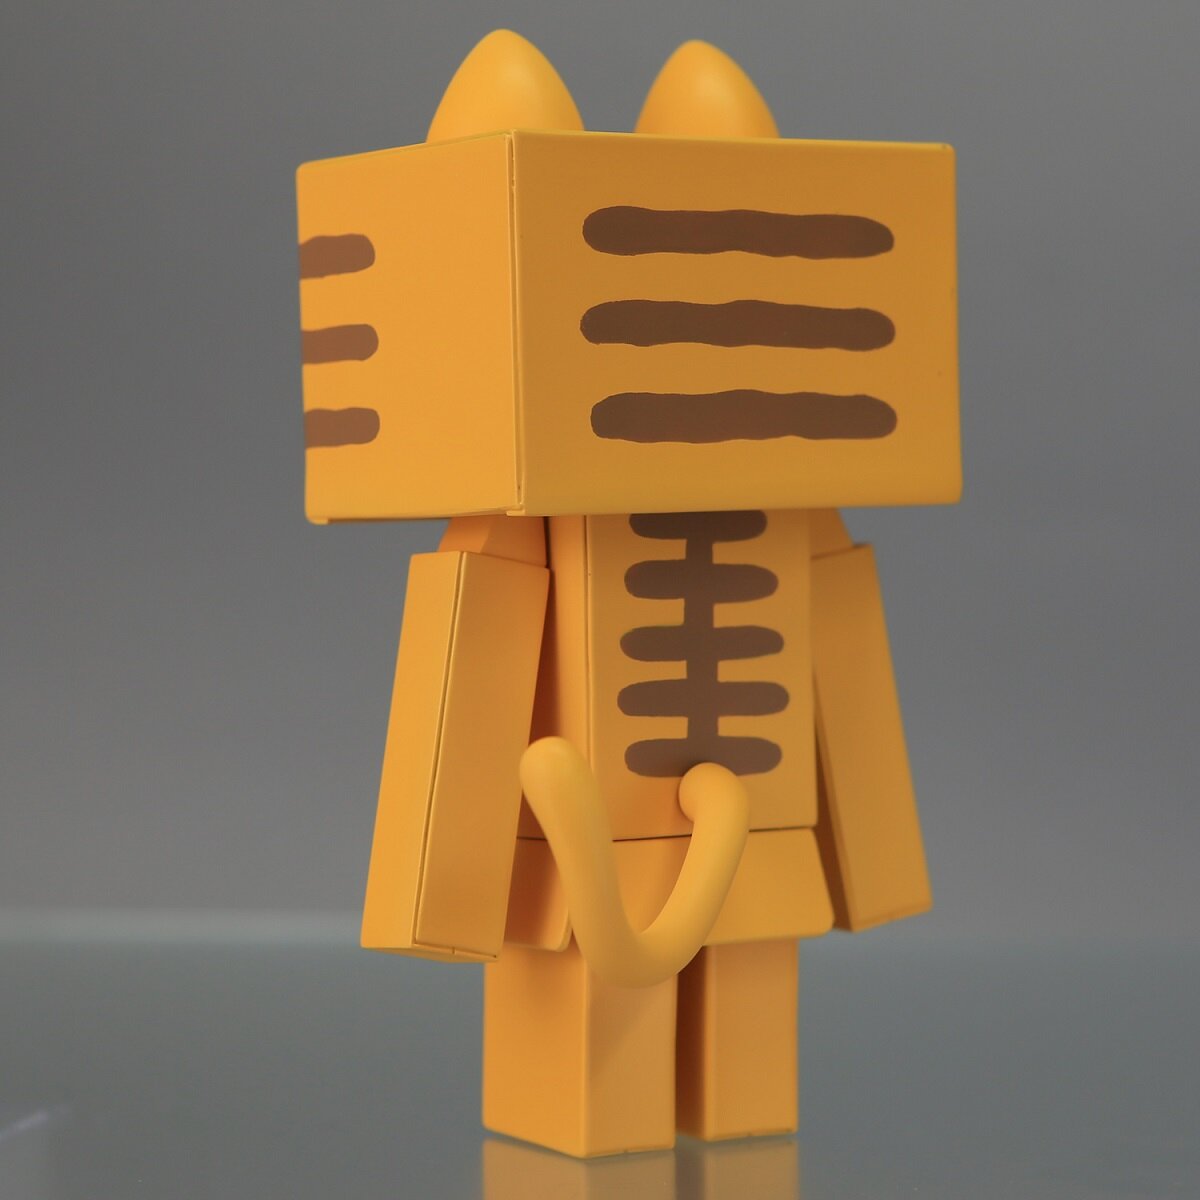 Otakufaic Toy or Code – Sky Toy Box